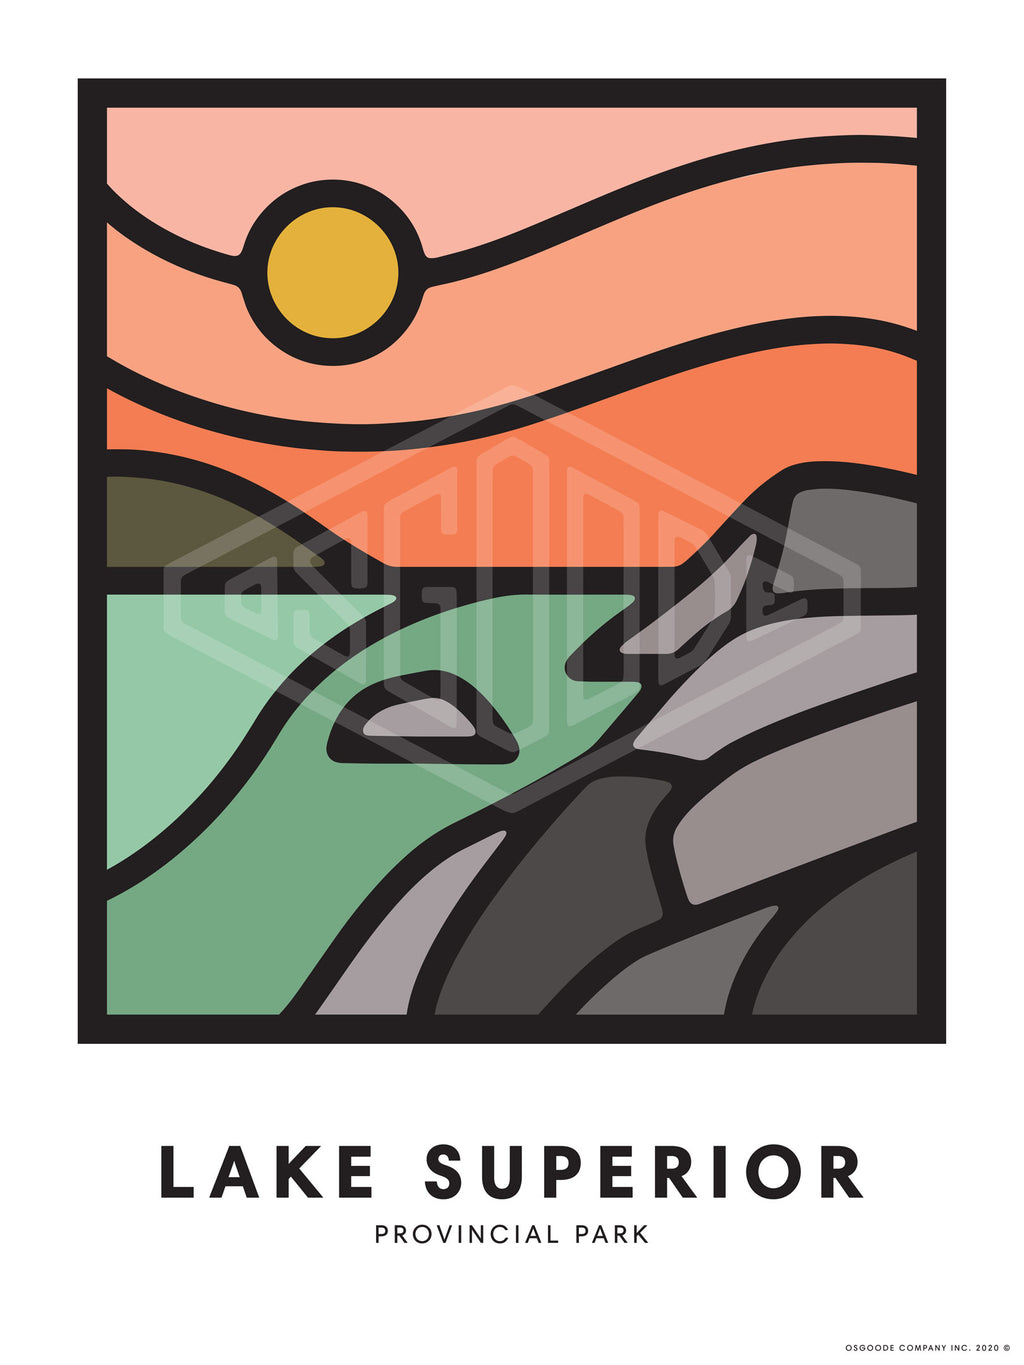 LAKE SUPERIOR PRINT